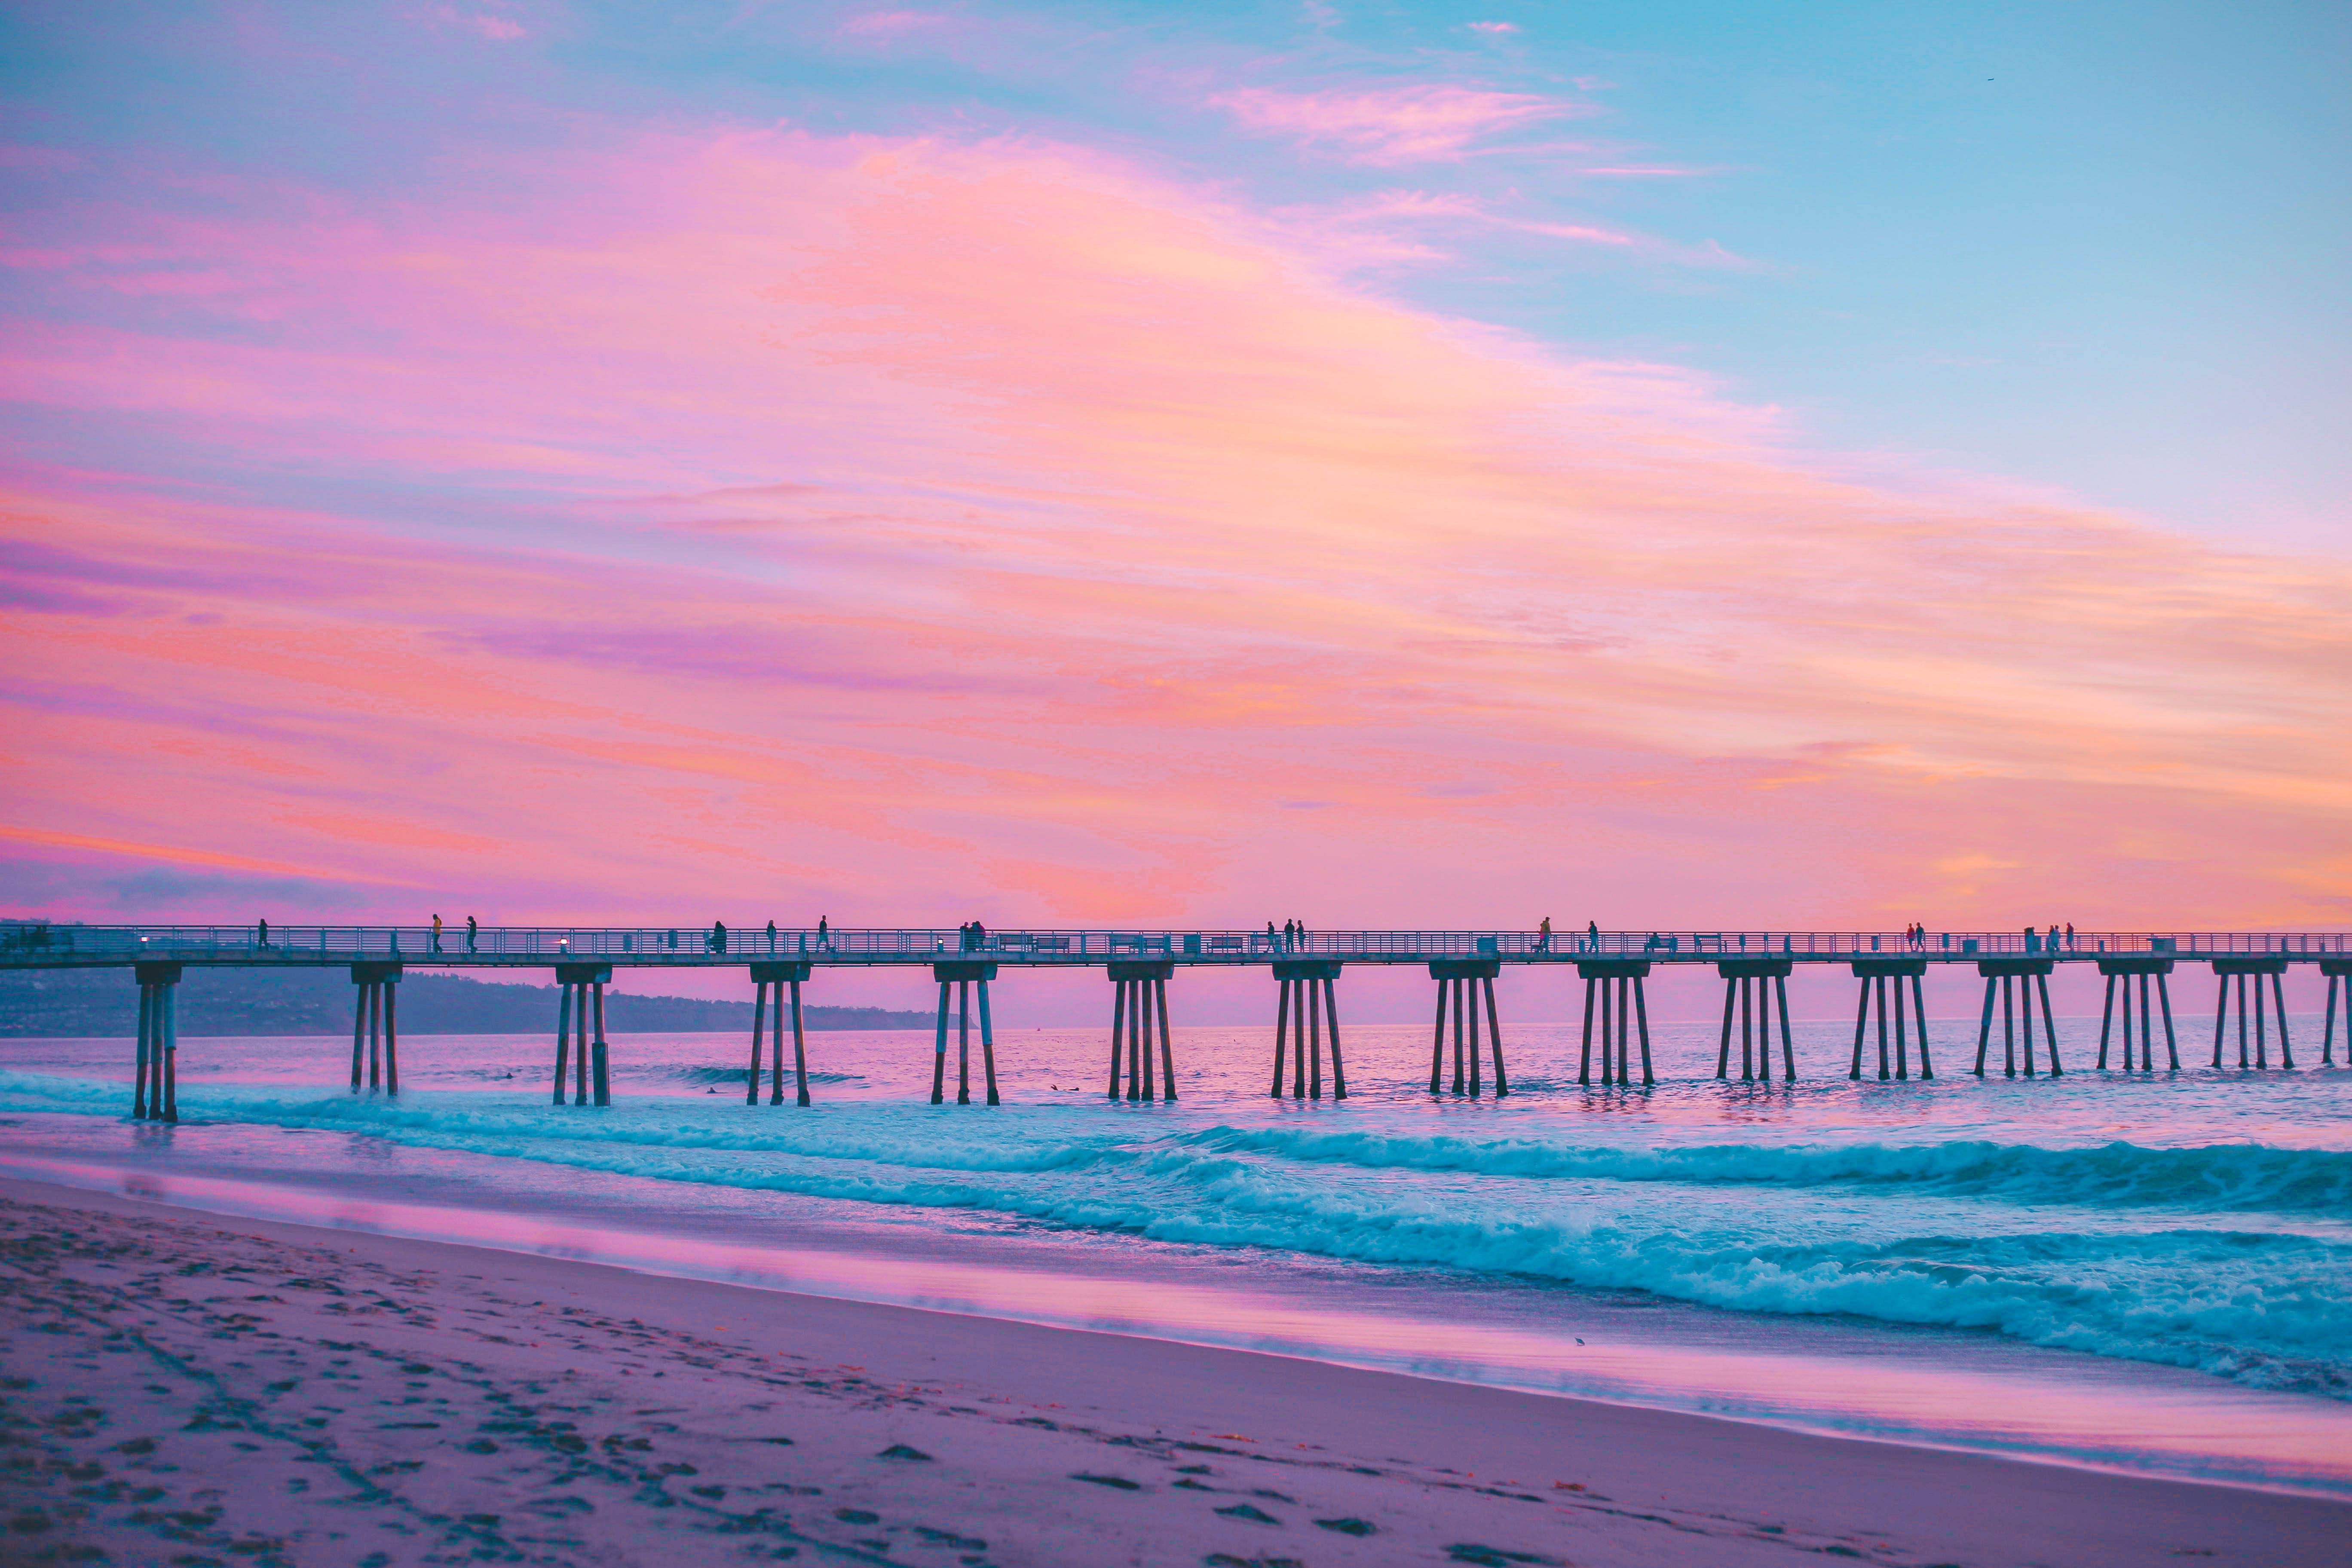 Download wallpaper 5472x3648 pier, sea, surf, pink, hermosa beach, california HD background